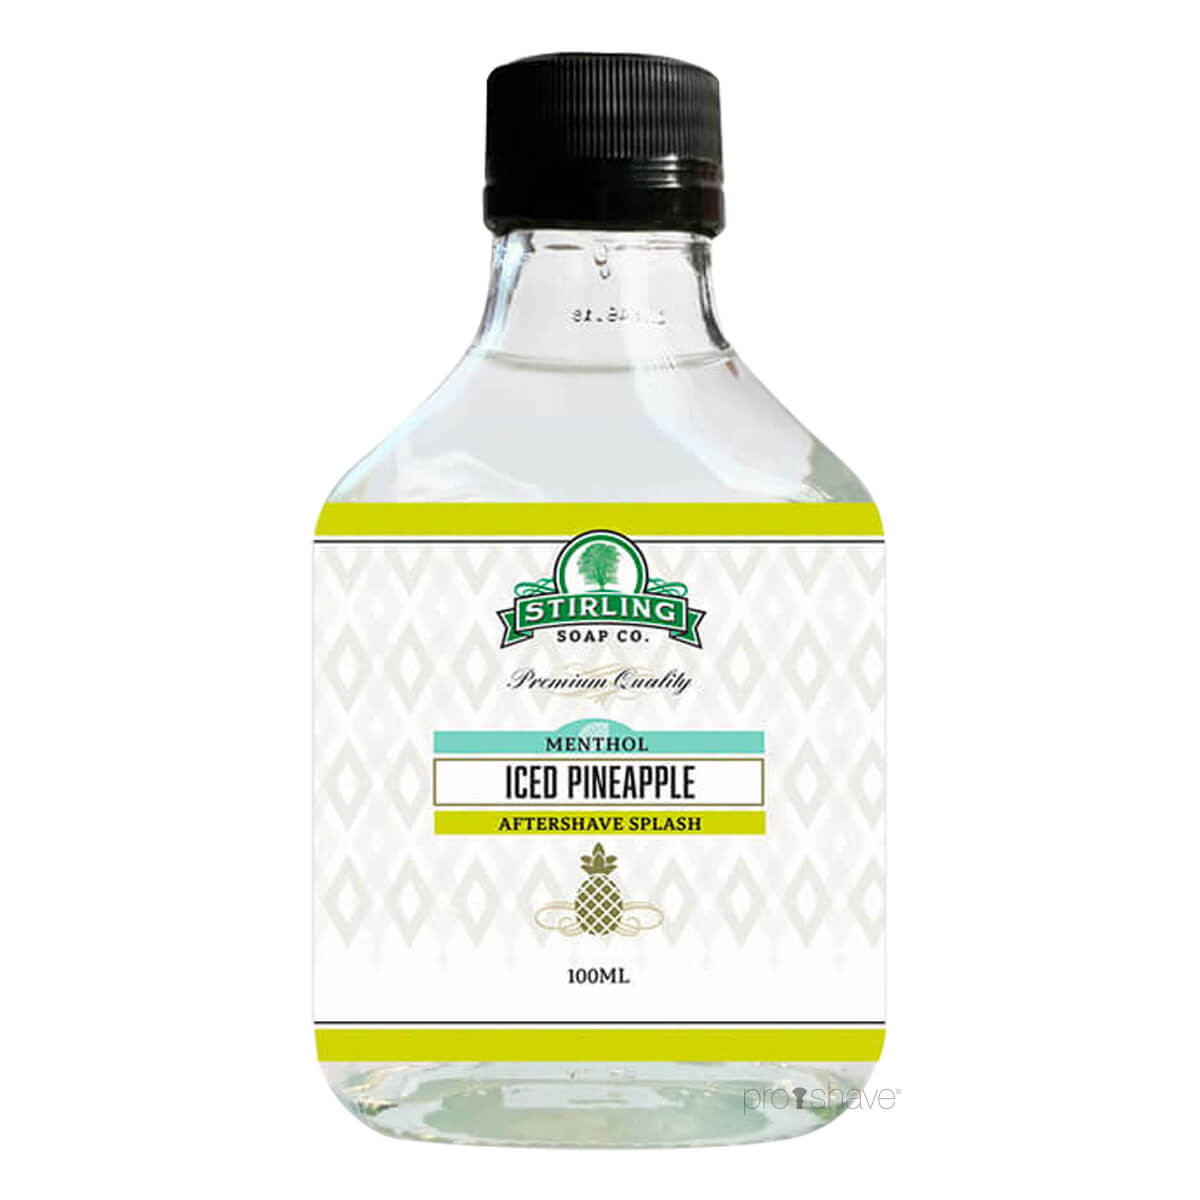 Stirling Soap Co. Aftershave Splash, Iced Pineapple, 100 ml.